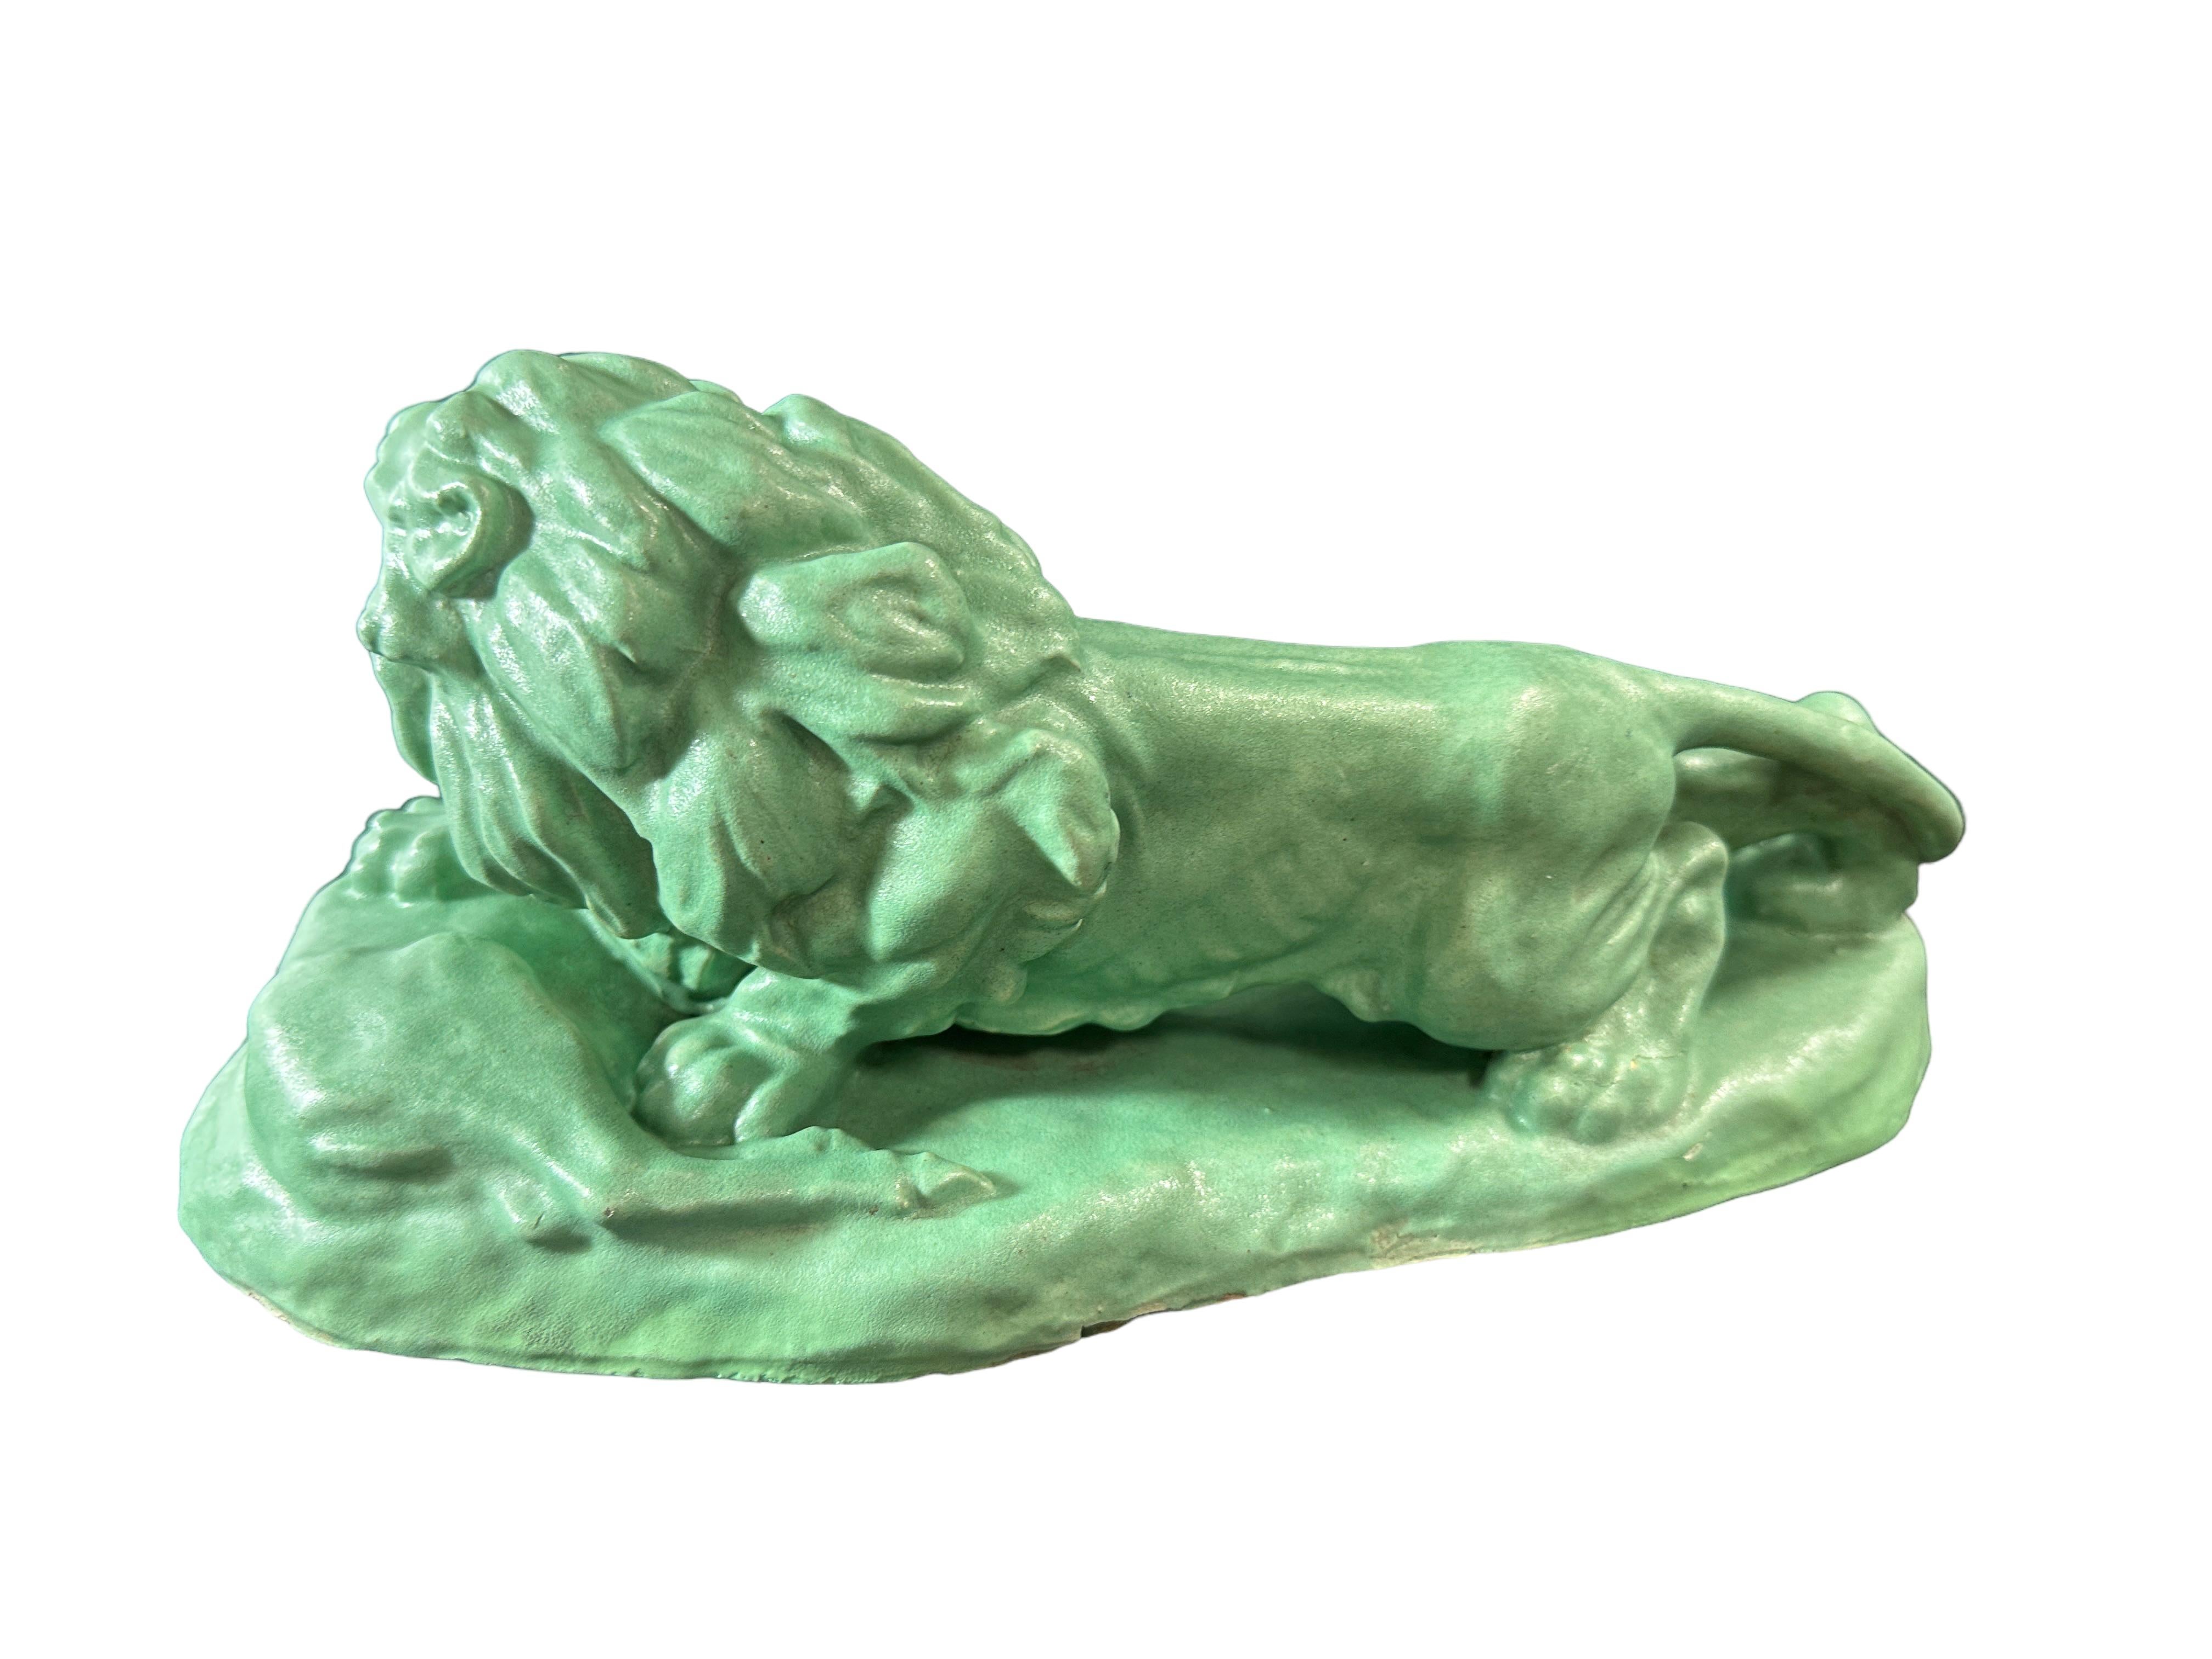 Austrian Lion Ceramic Terracota Sculpture Jul. Singer, 1937, Vienna, Austria For Sale